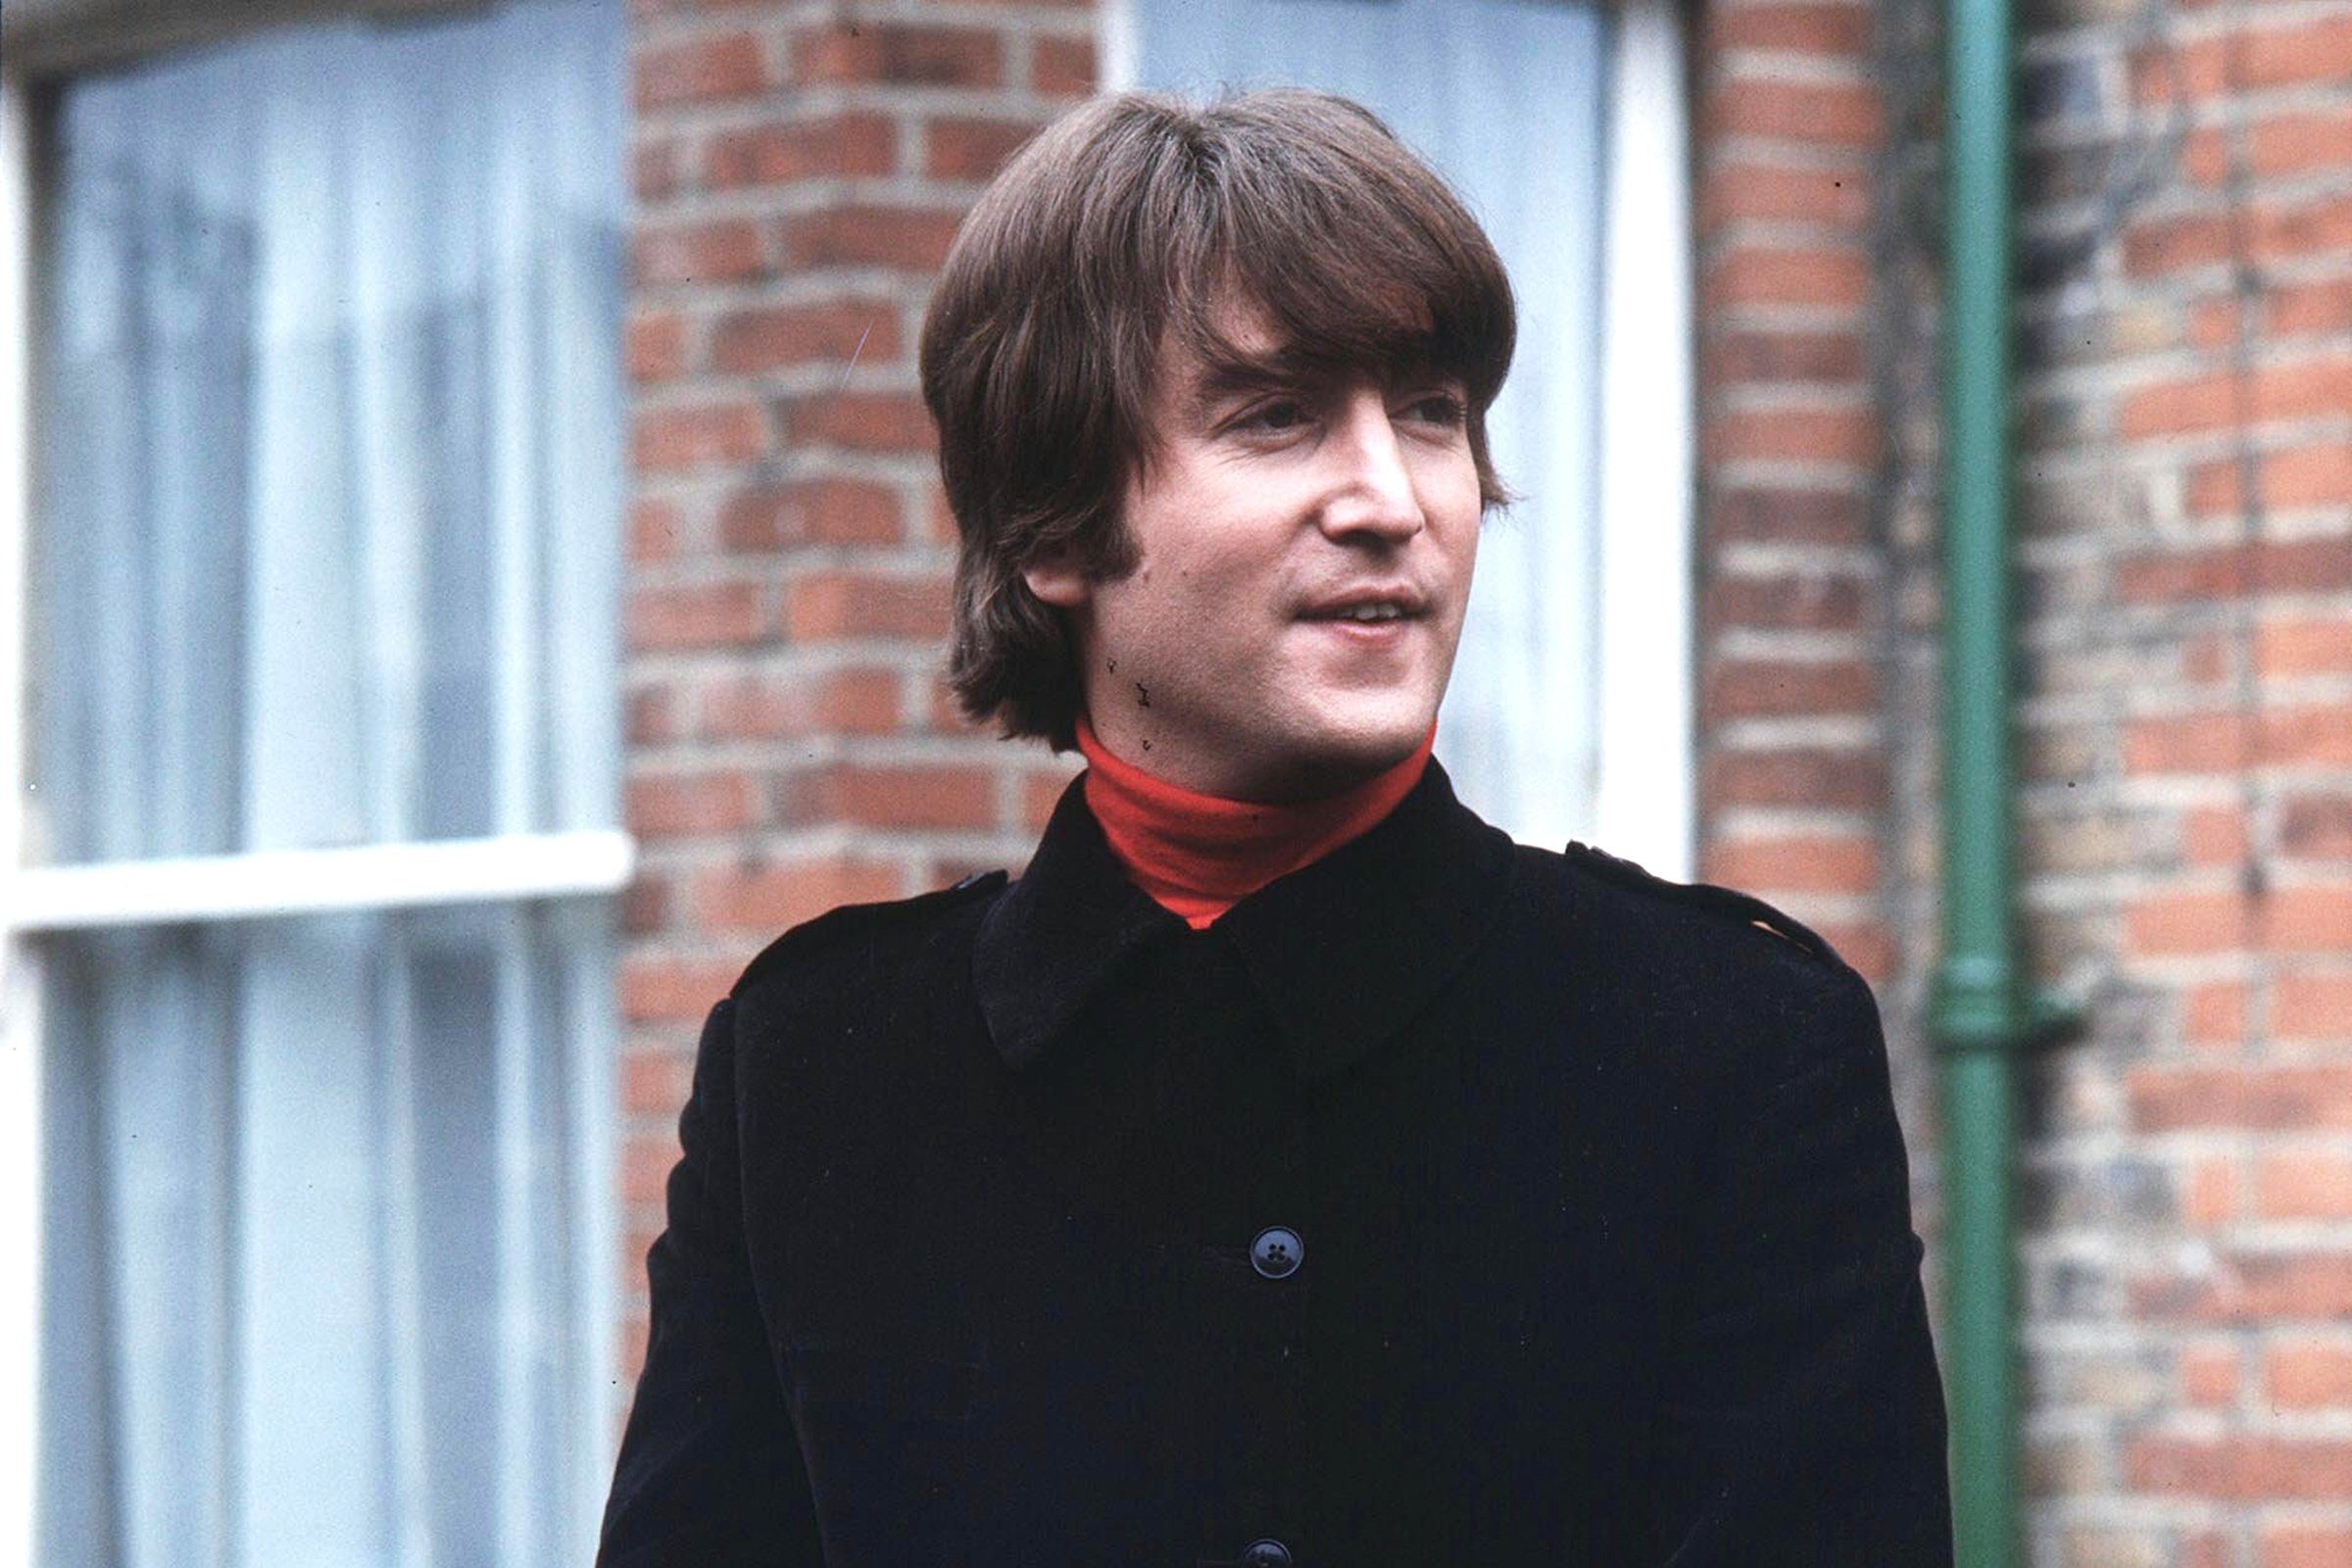 Mandatory Credit: Photo by Pierluigi Praturlon/Shutterstock (11453b) John Lennon in Ailsa Avenue, Twickenham The Beatles Filming 'Help' - 1965